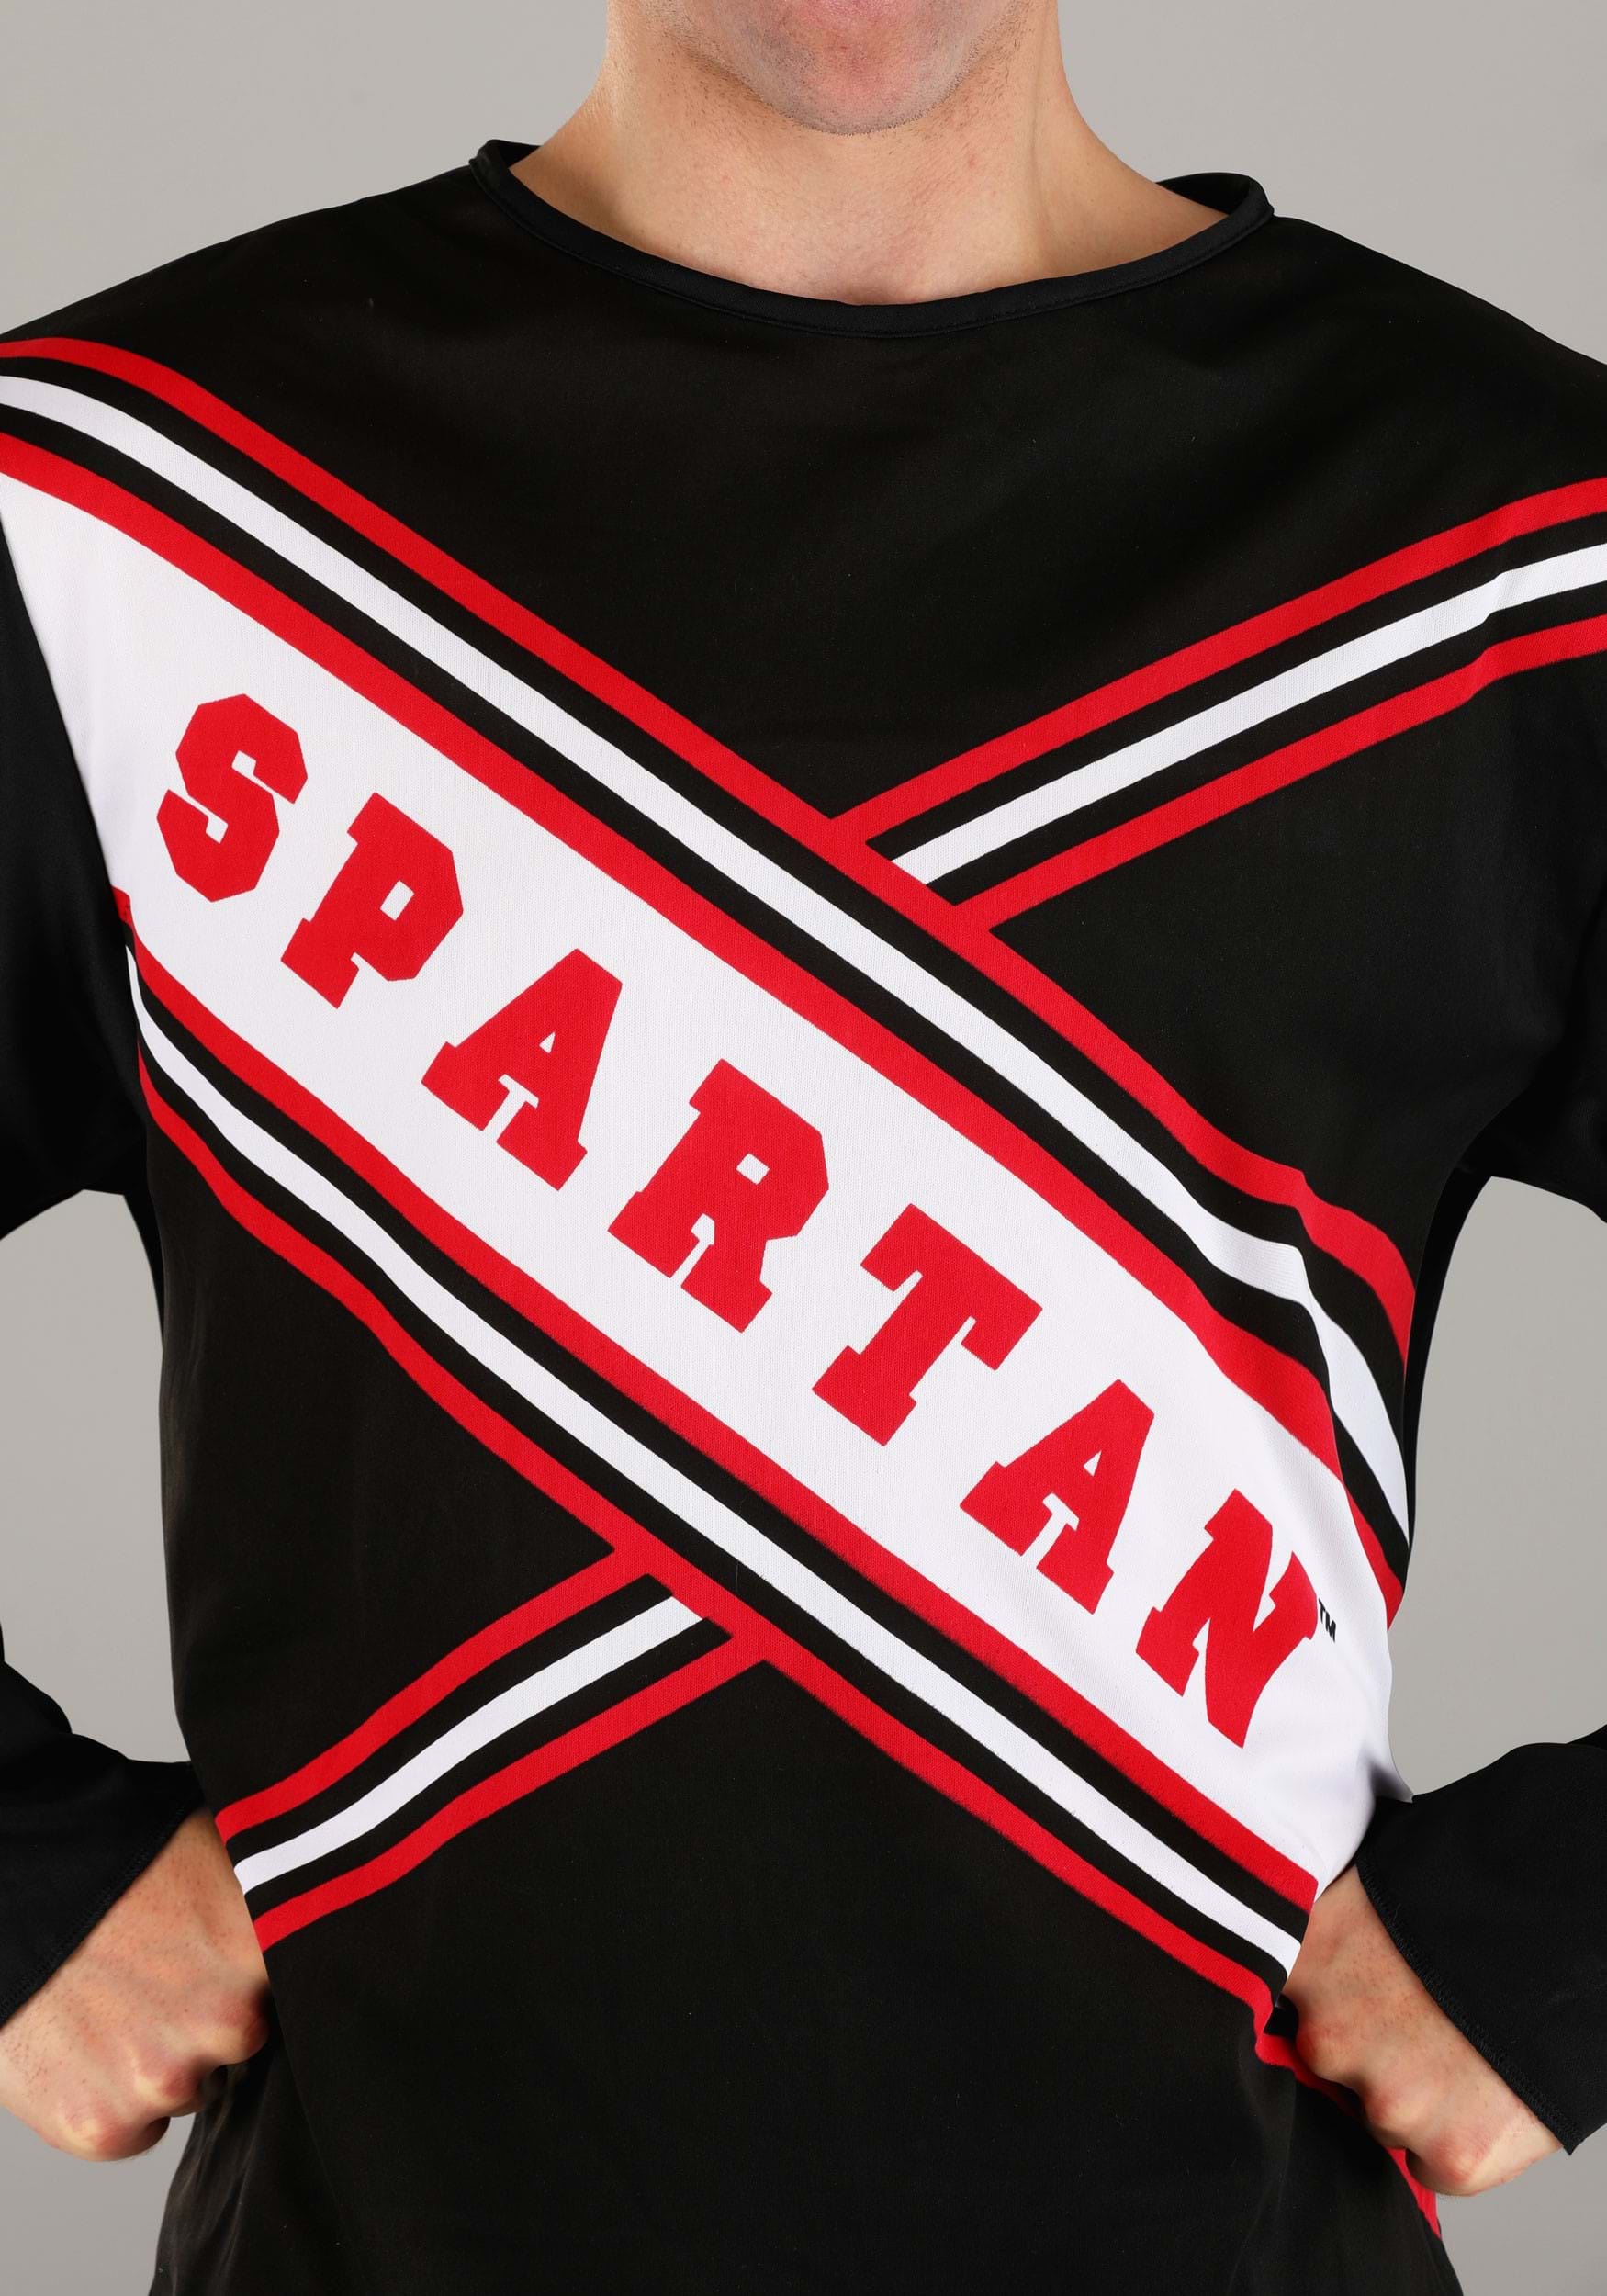 Adult Saturday Night Live Spartan Male Cheerleader Costume